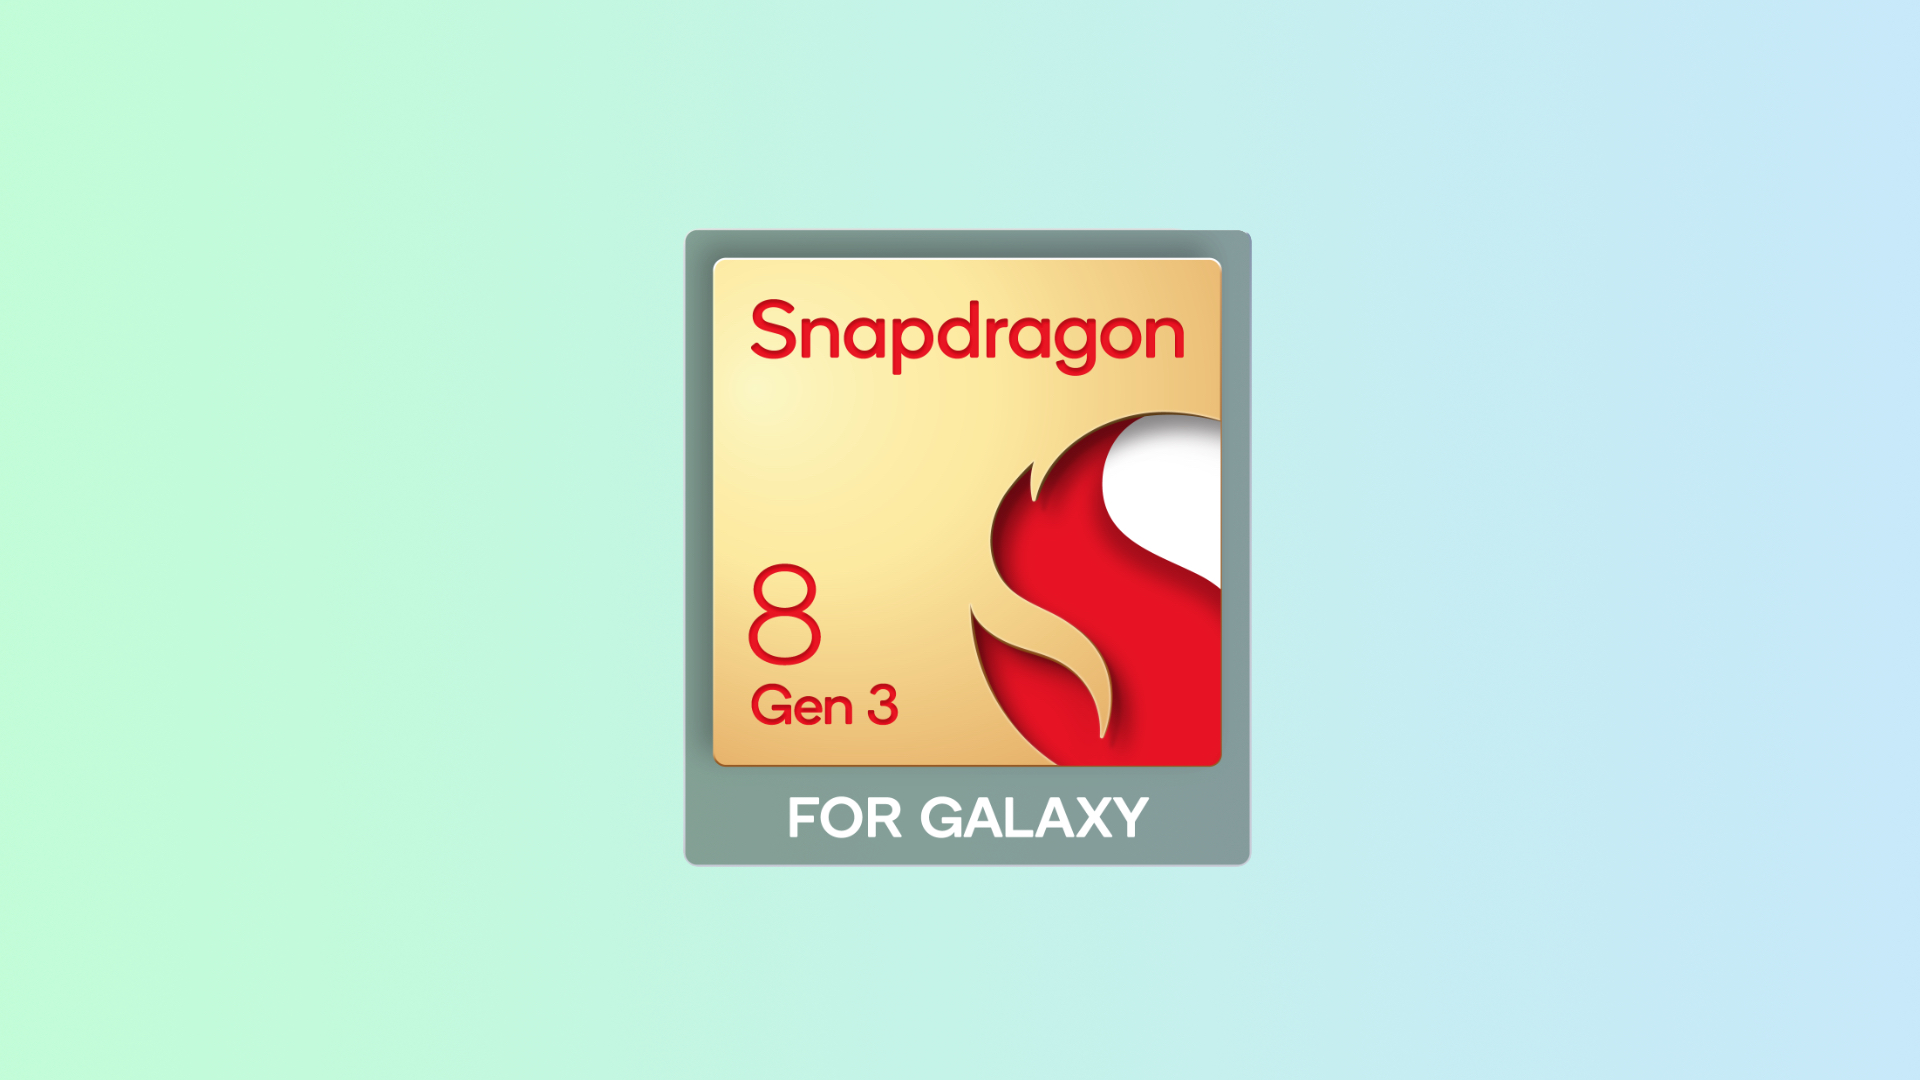 EXCLUSIVE: Here is Qualcomm's new Snapdragon 8 Gen 3 (Full Specs